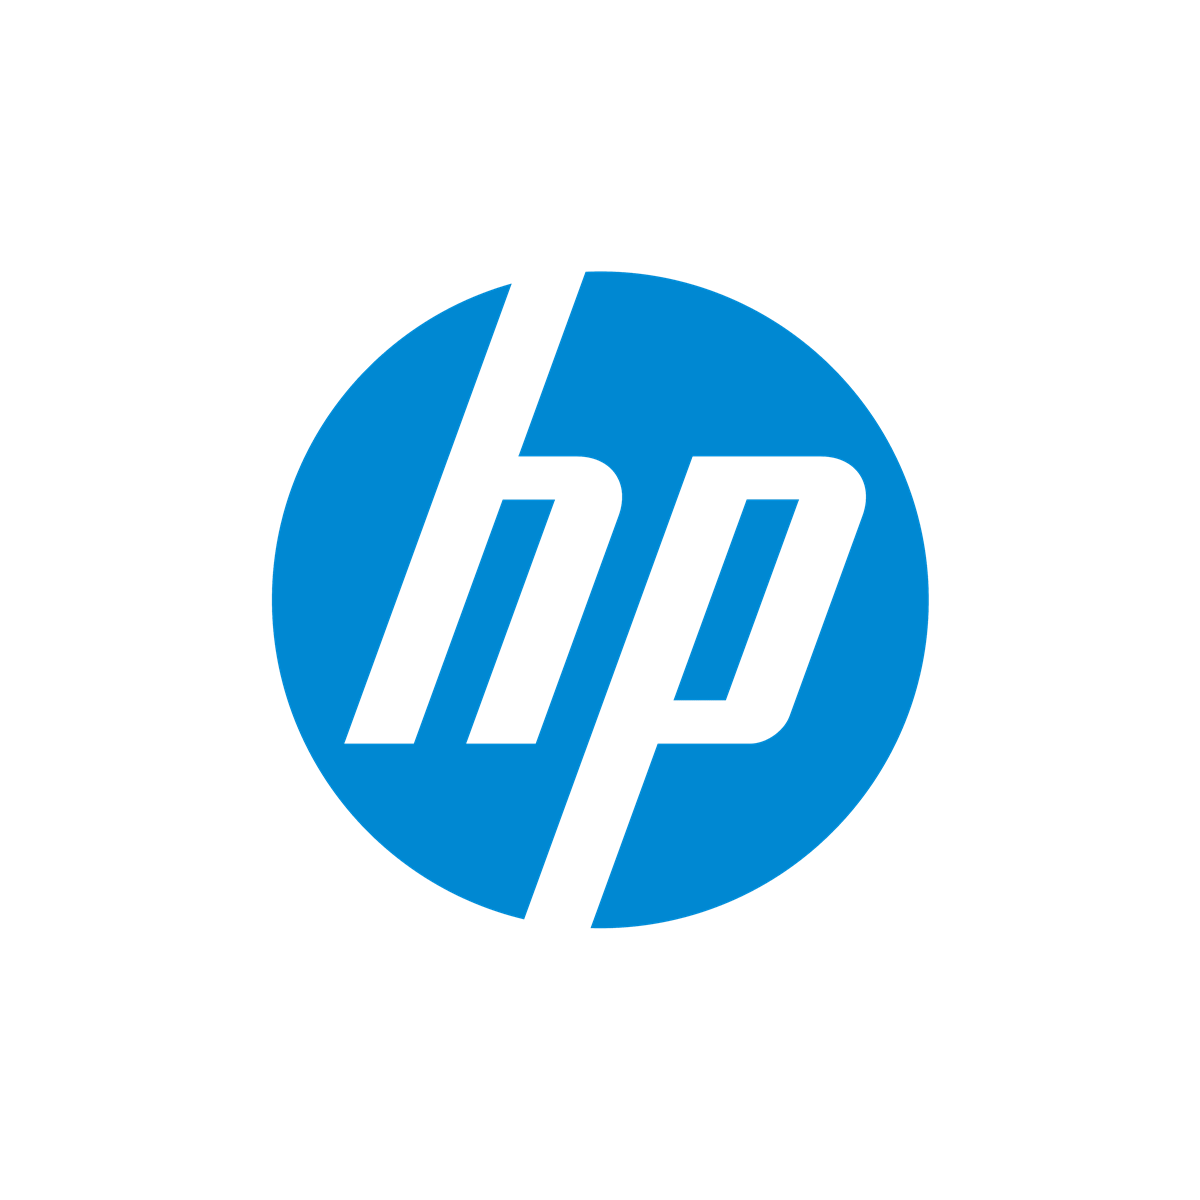 HP Kit-CE878A PCA replace 52 071 4 ROHS2 04